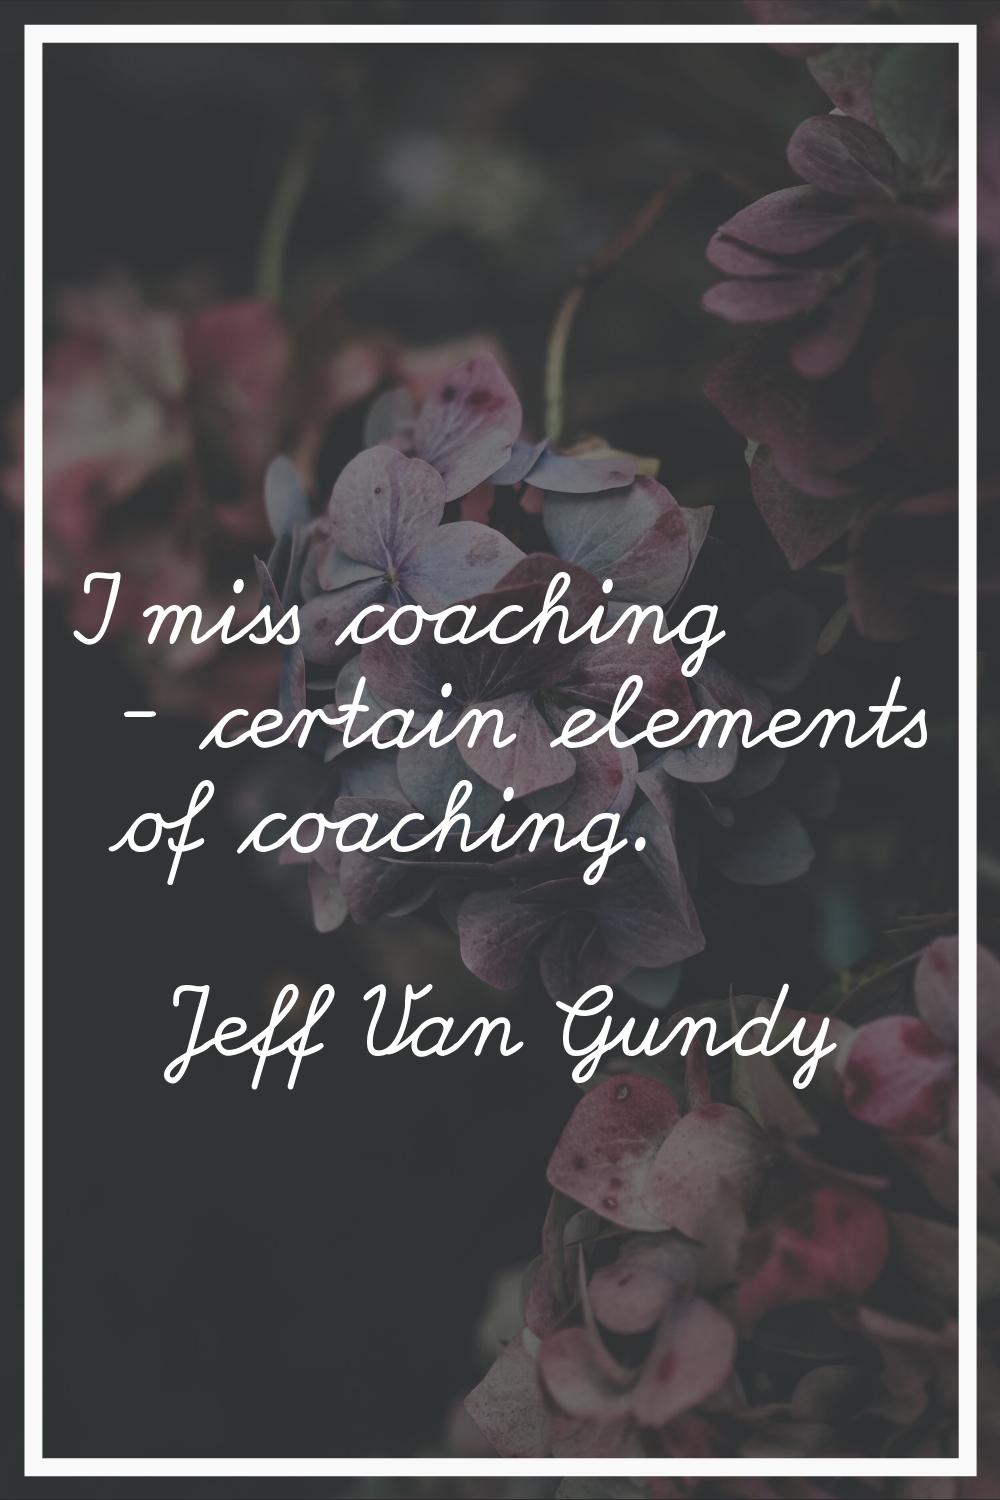 I miss coaching - certain elements of coaching.